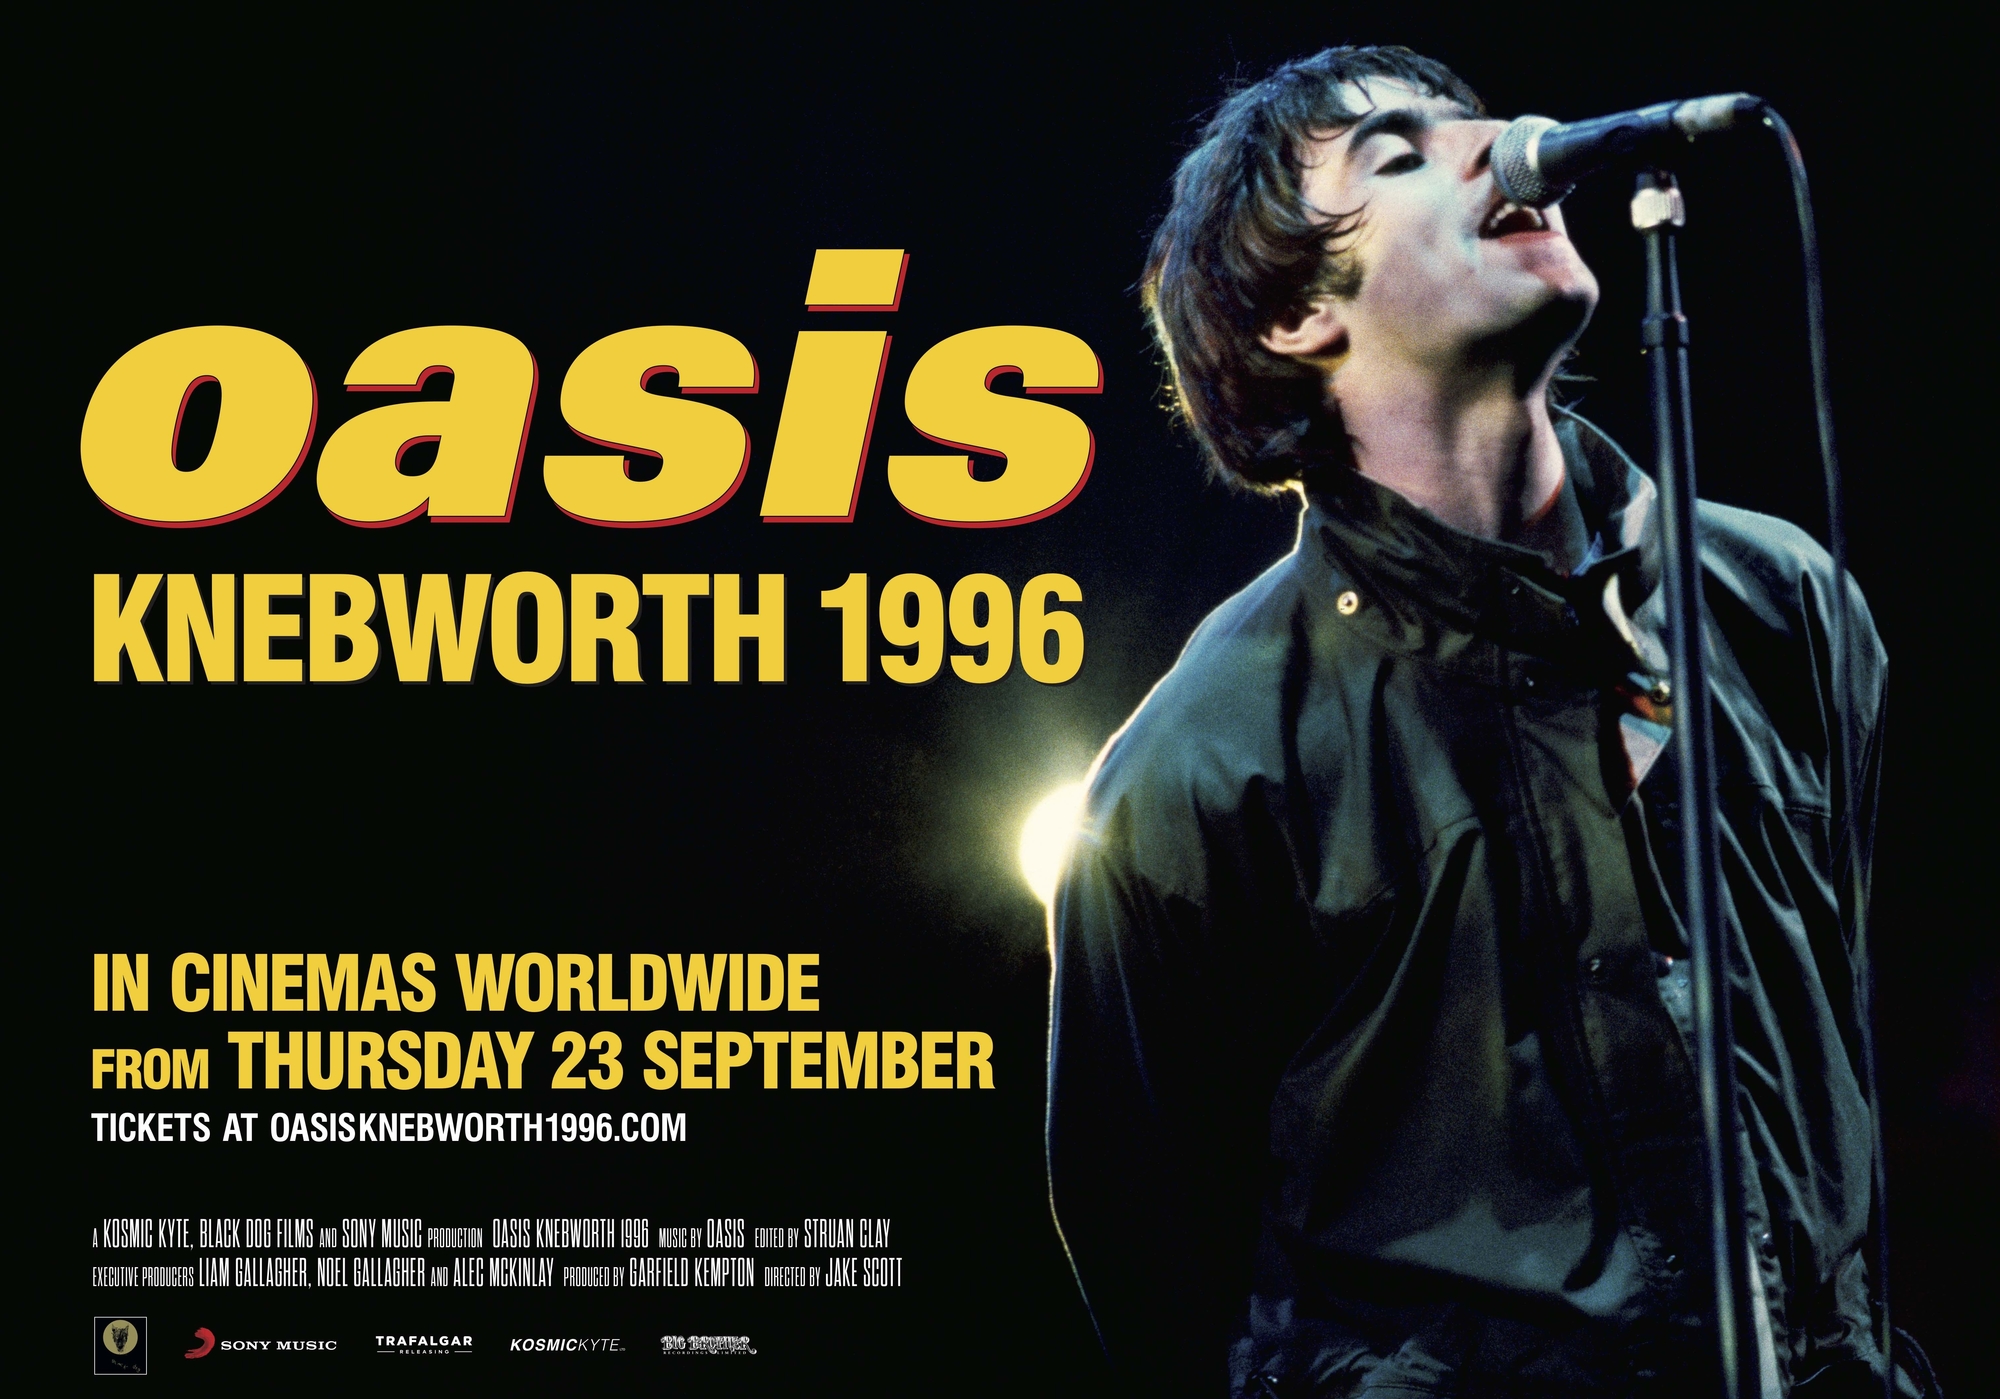 Oasis Umumkan Jadwal Rilis Film Dokumenter "Oasis Knebworth 1996"